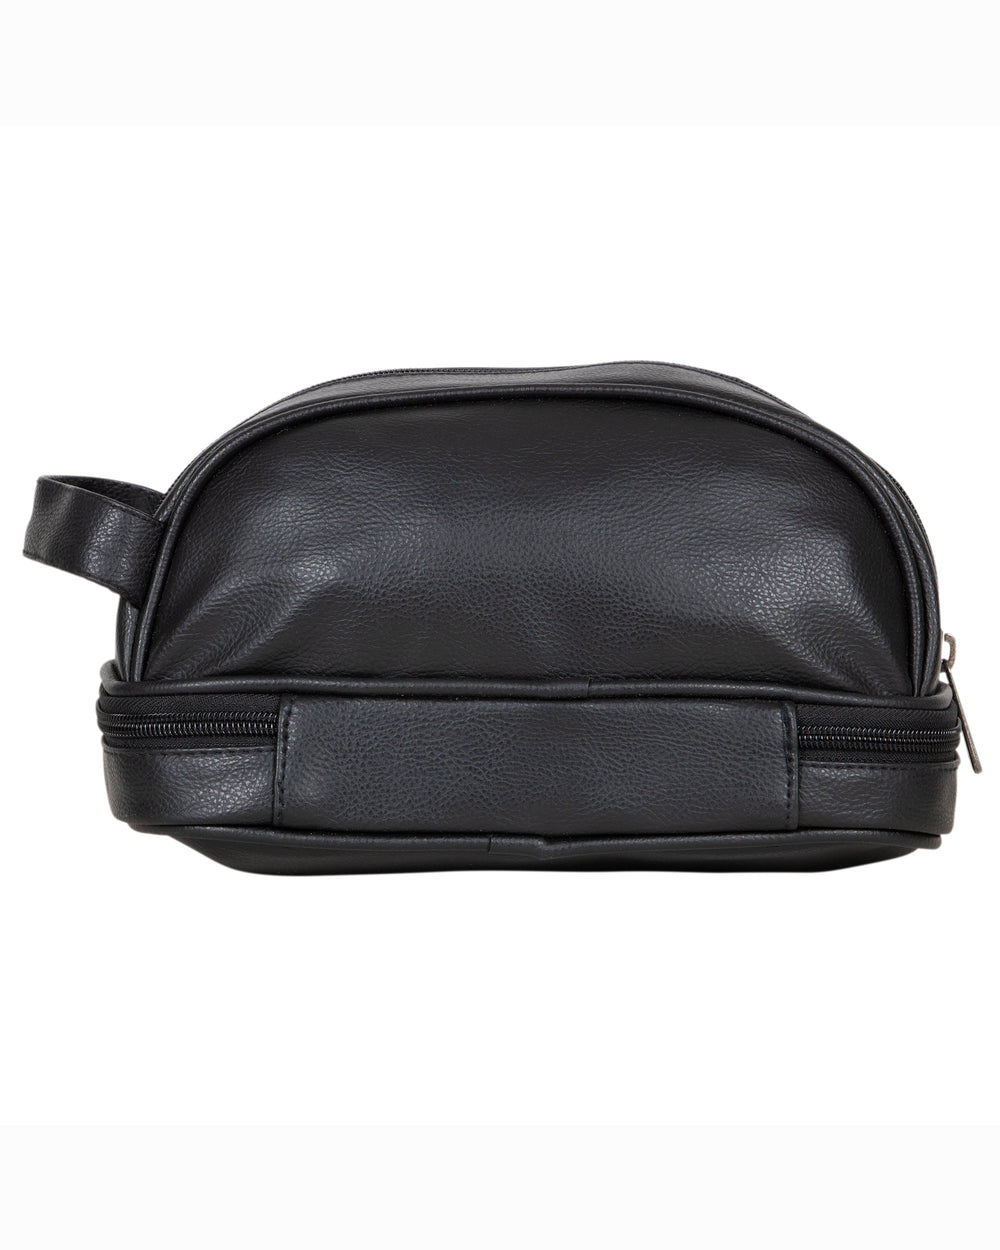 Chingford Two-Tone Faux Leather Travel Dopp Kit - Black